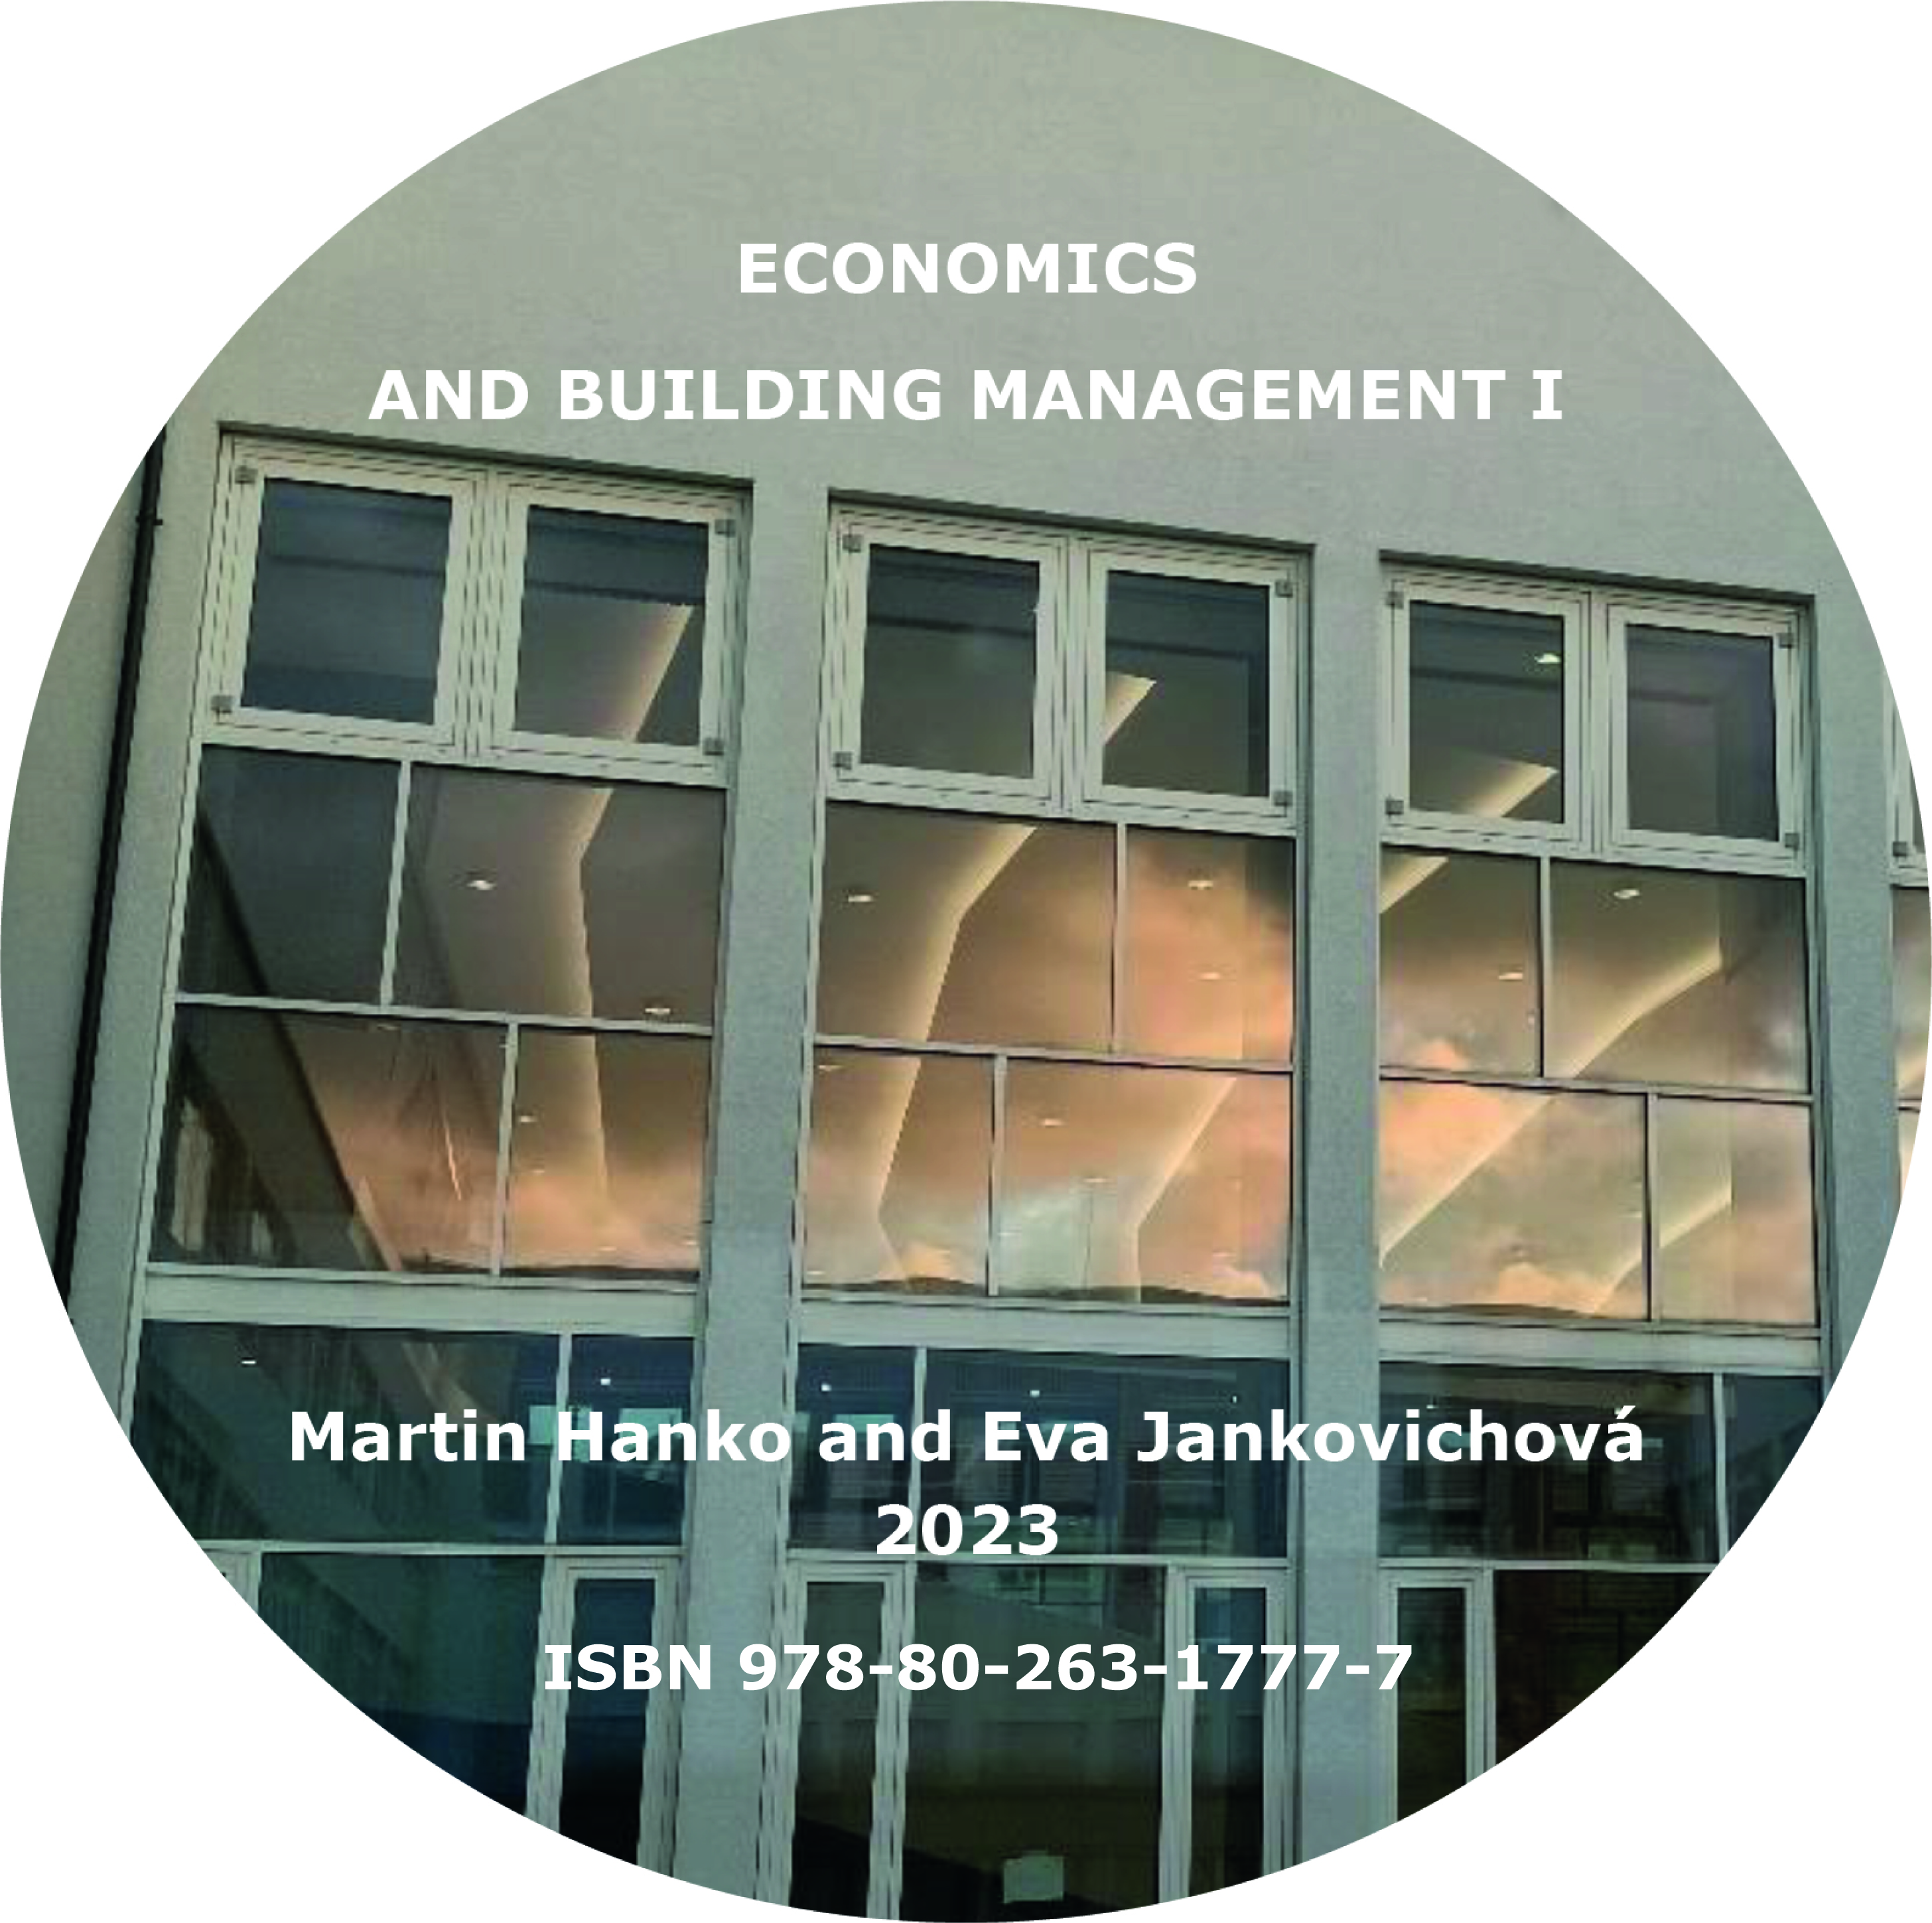 Economics and building management I